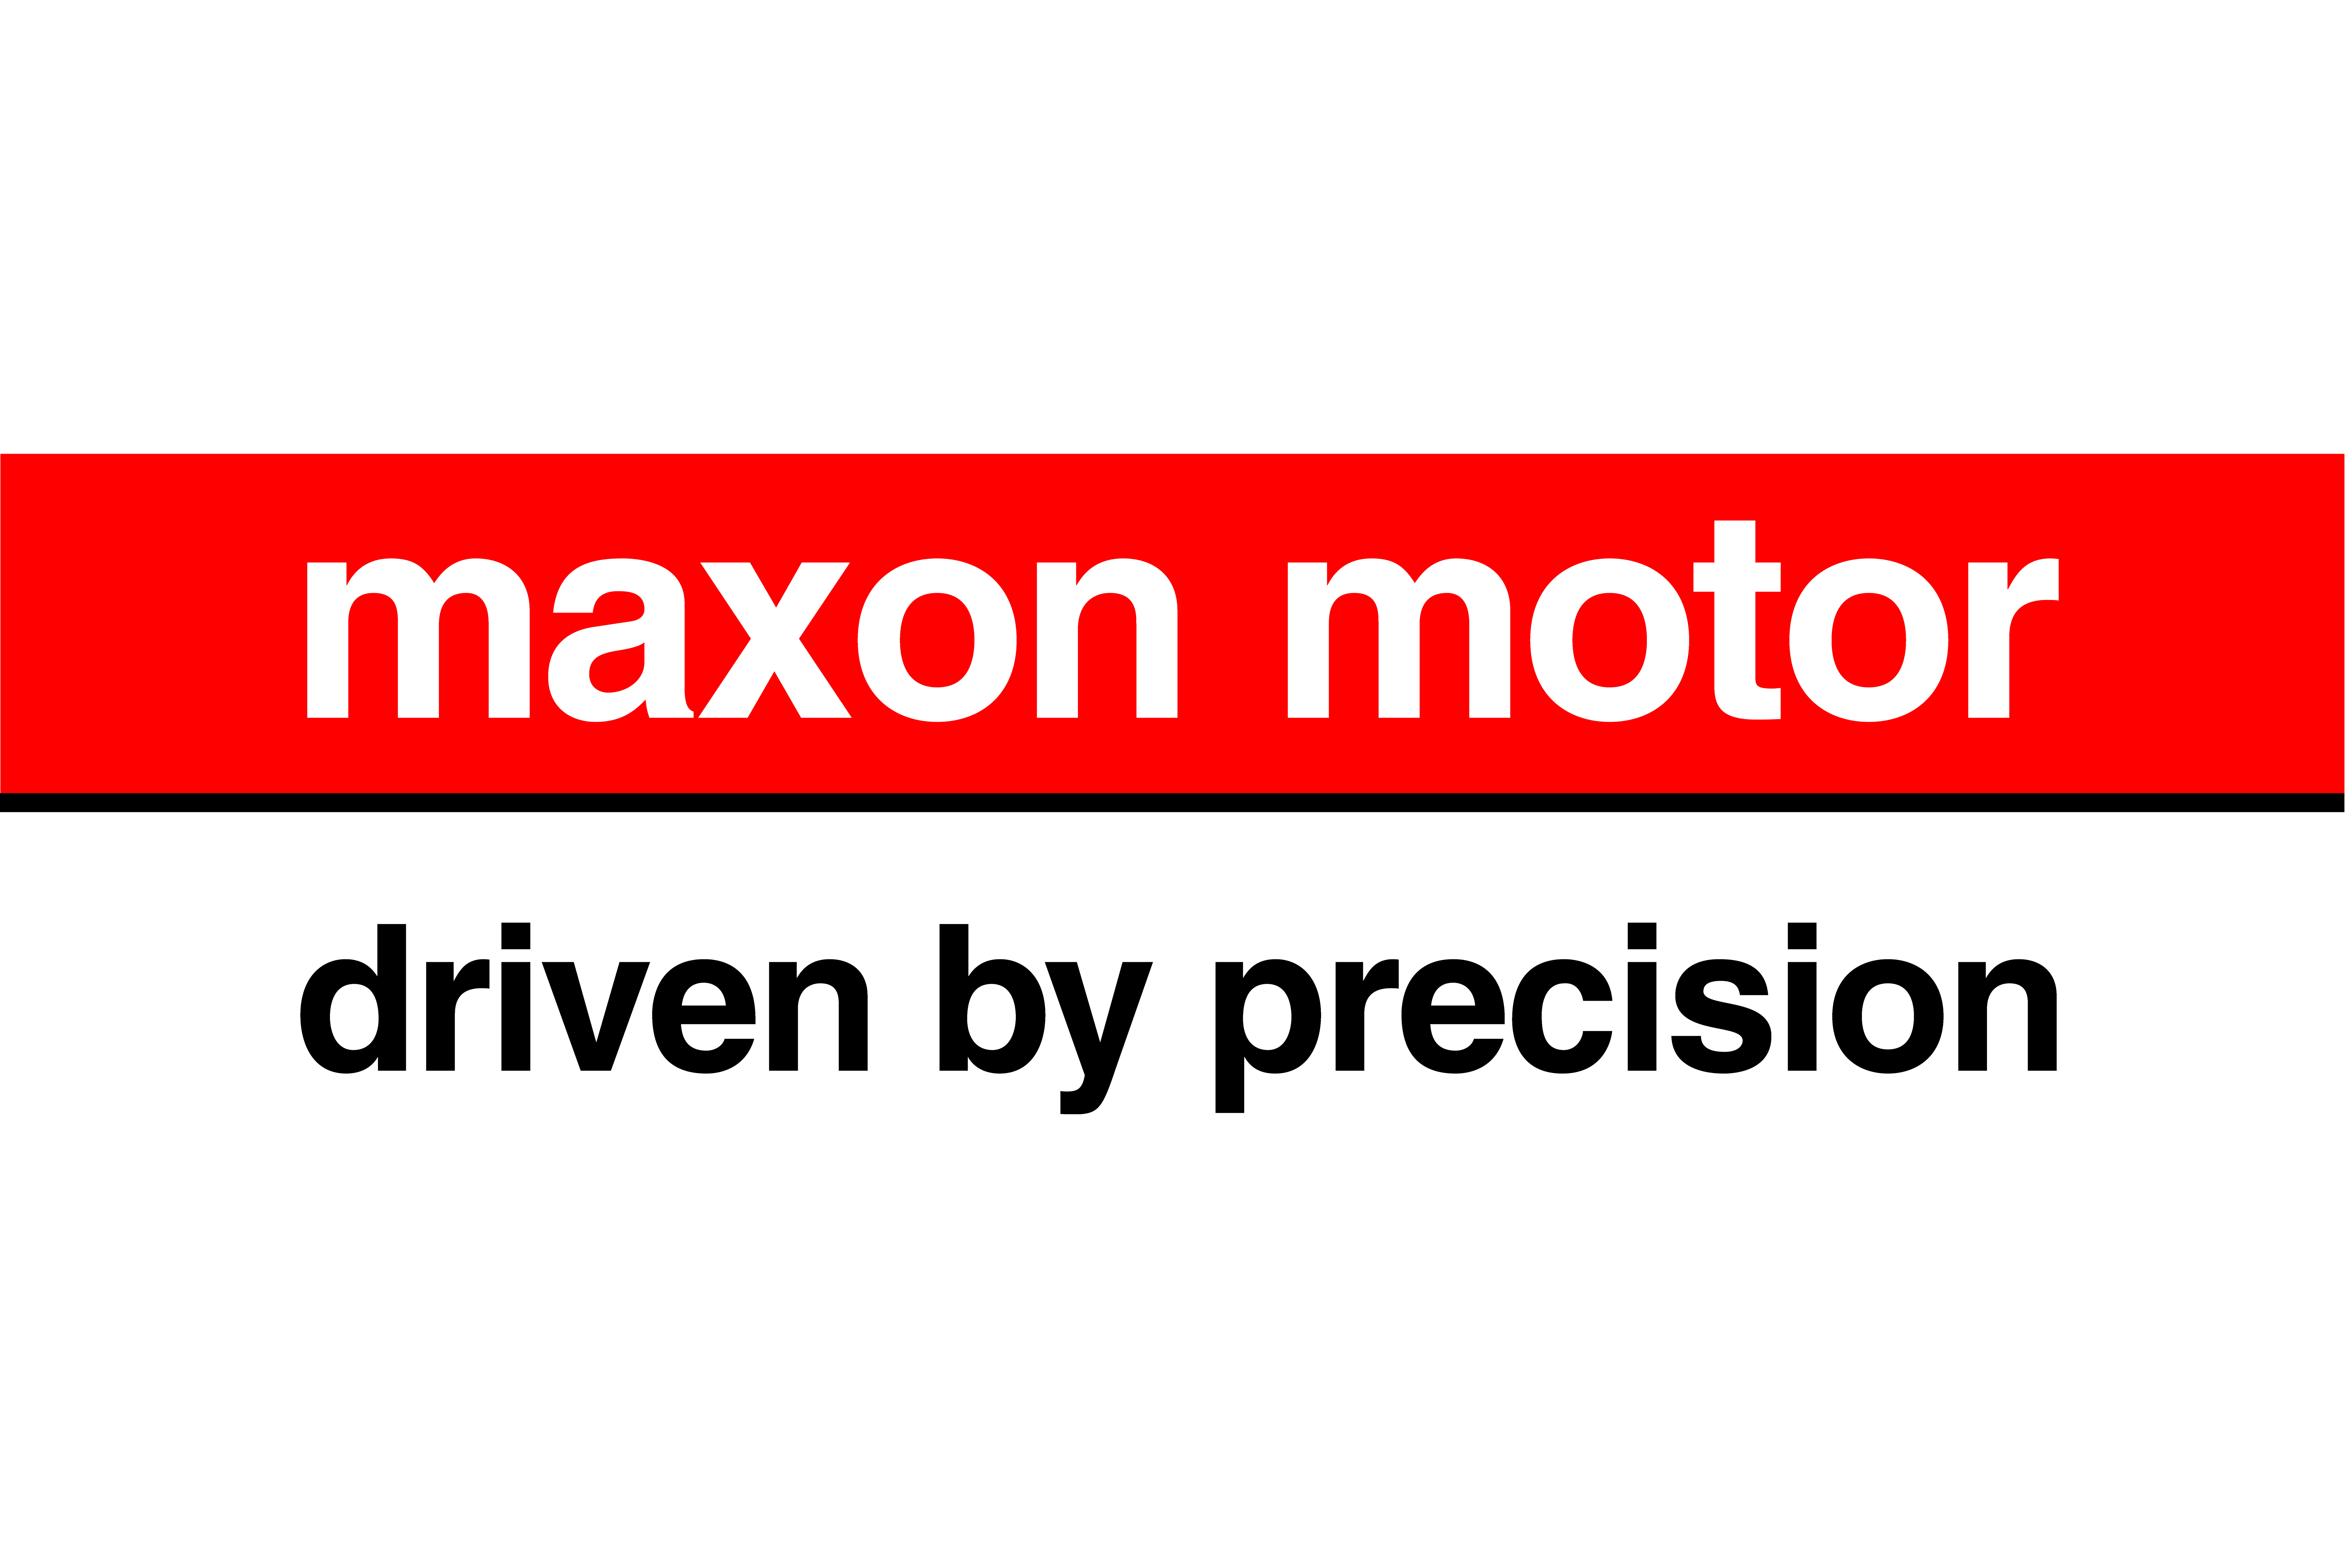 maxon-motor.jpg